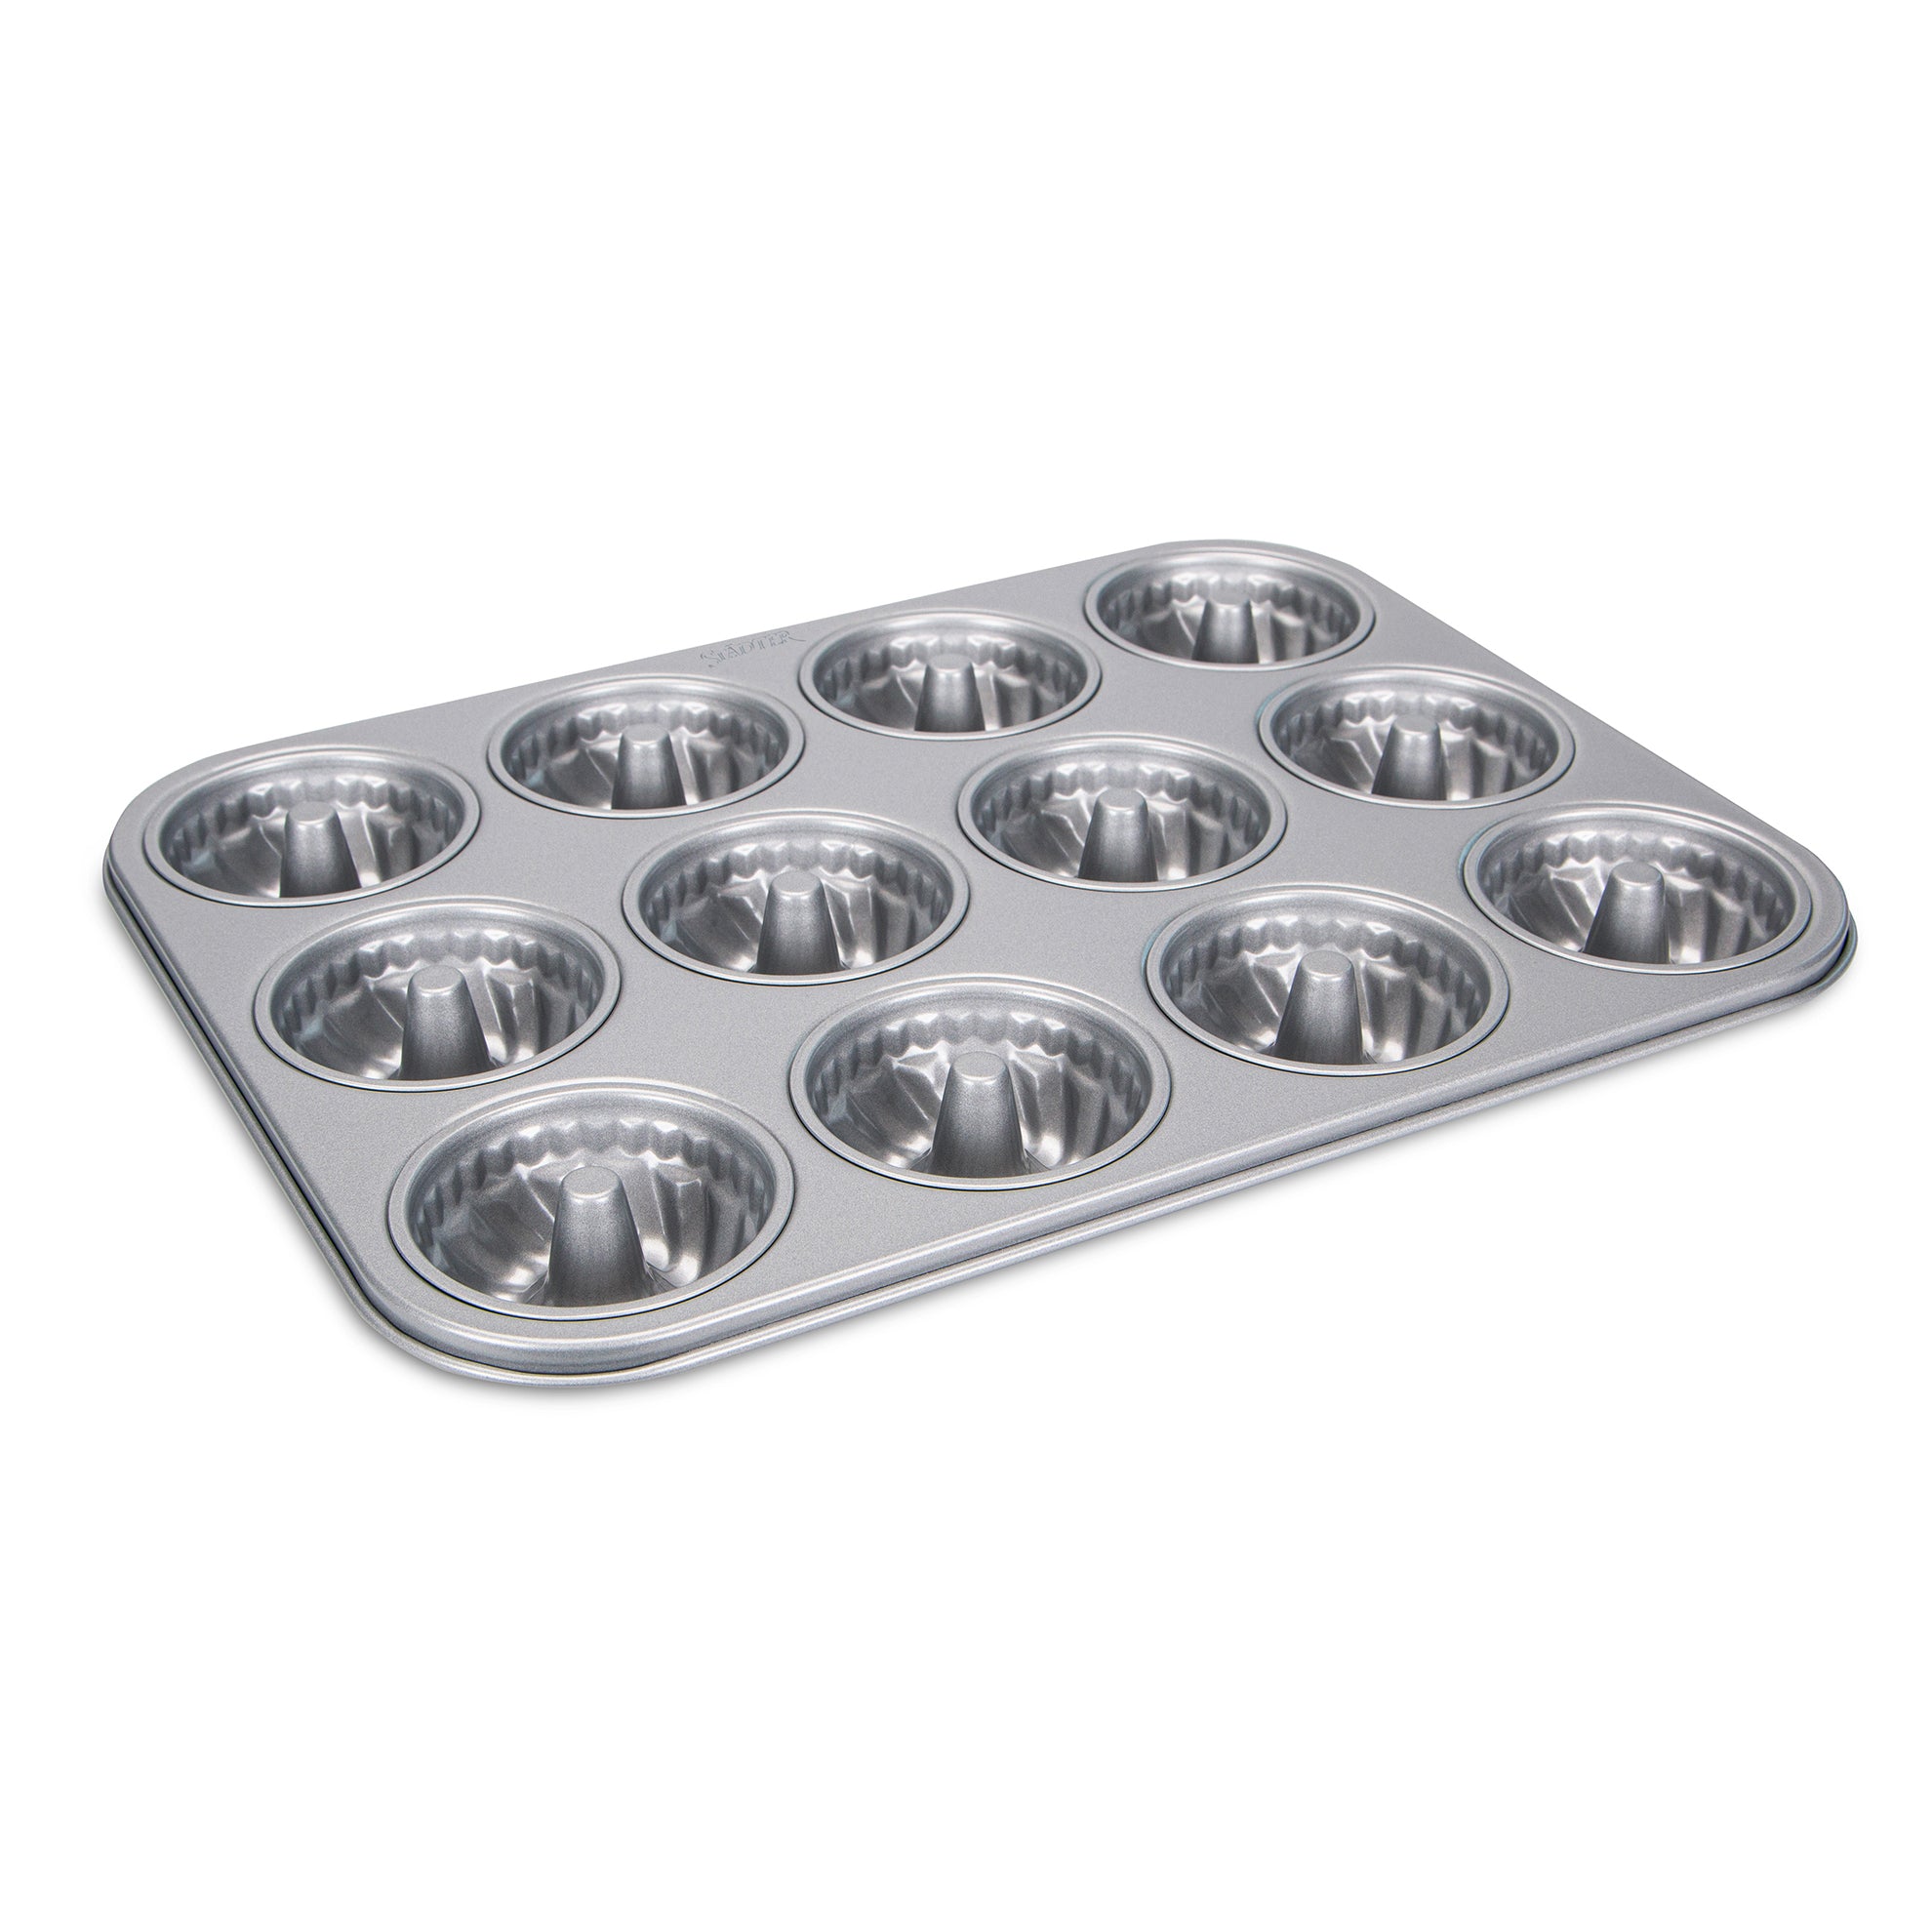 STÄDTER We love baking - 24 cups Mini bundt pan – Alko Kitchenware